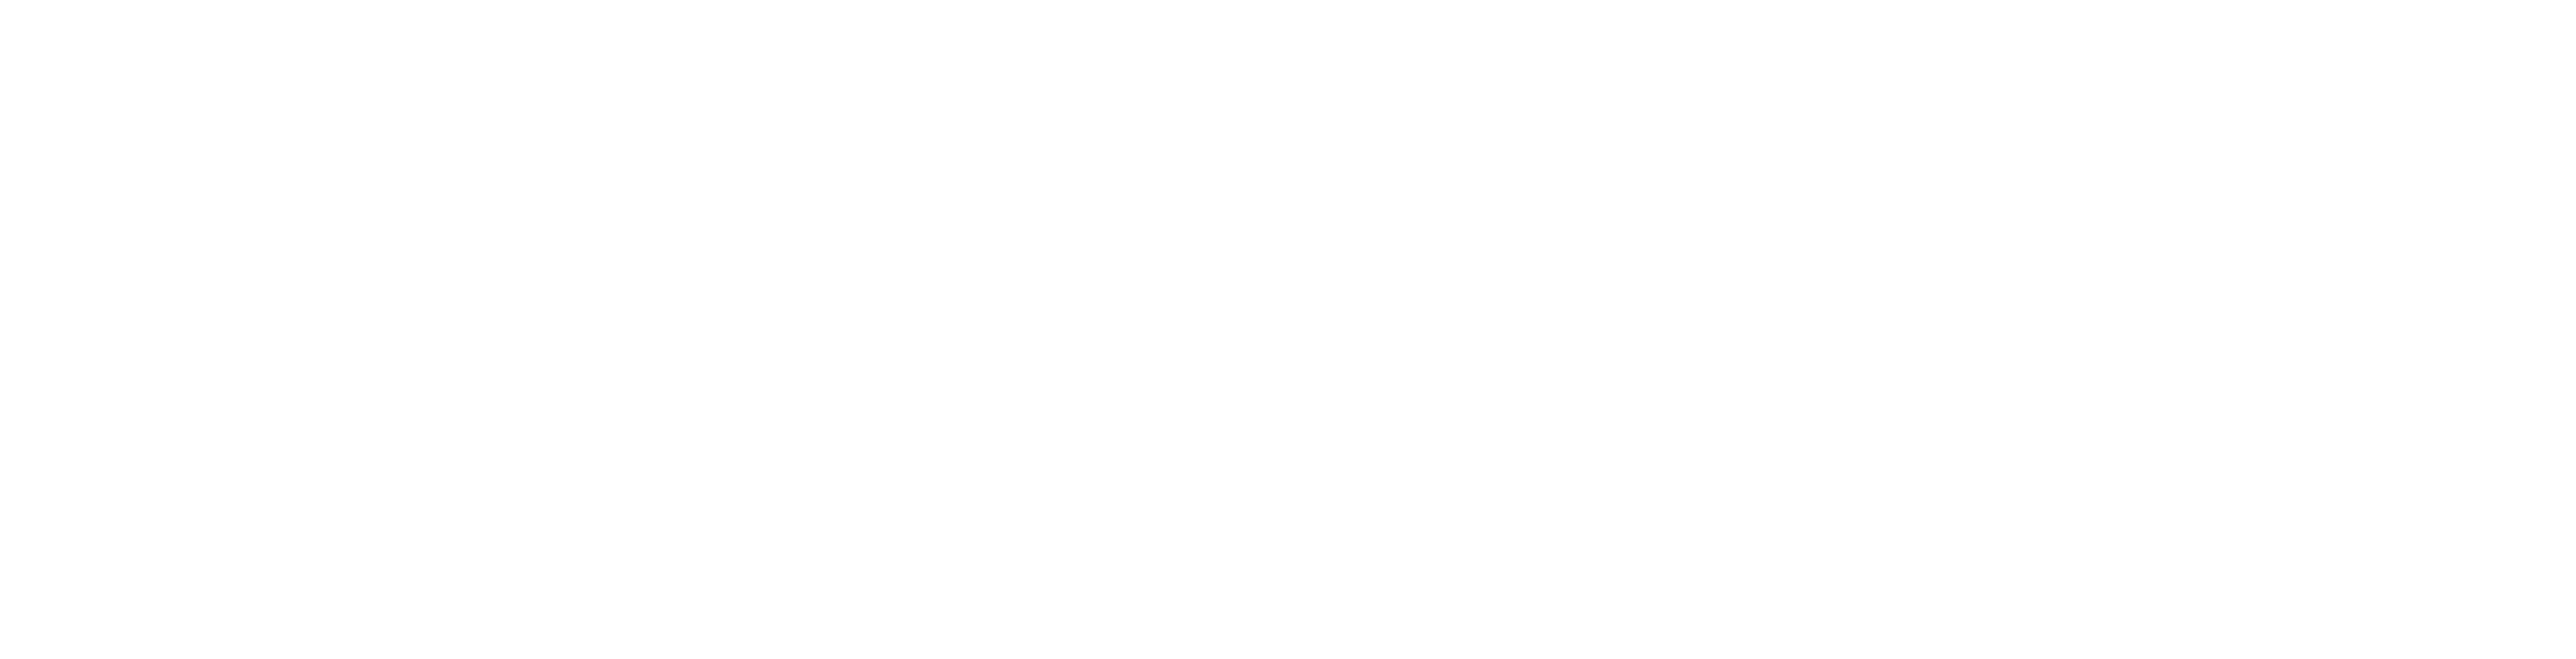 Hycu Logo